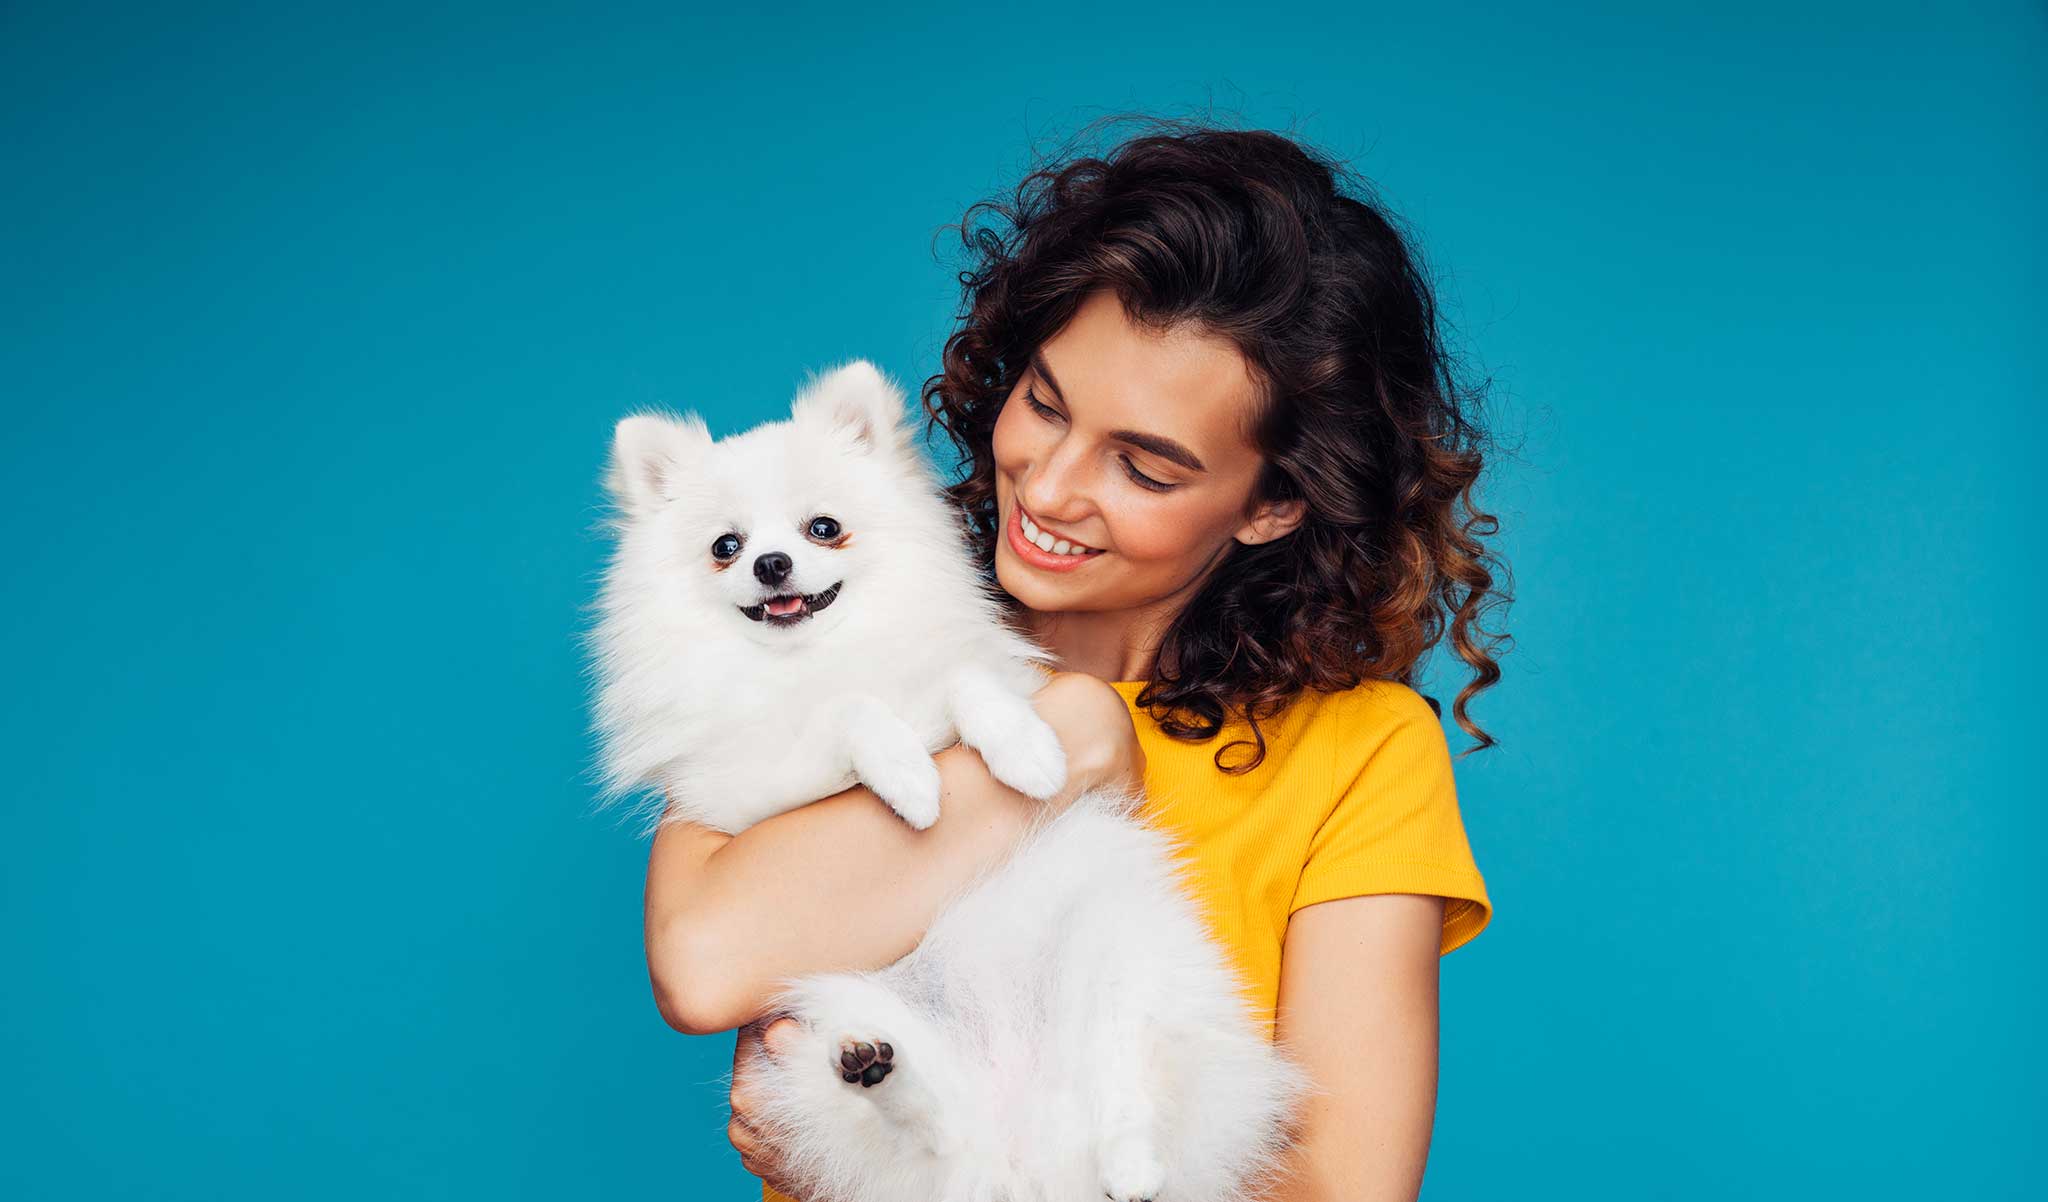 A woman with a white Pomeranian